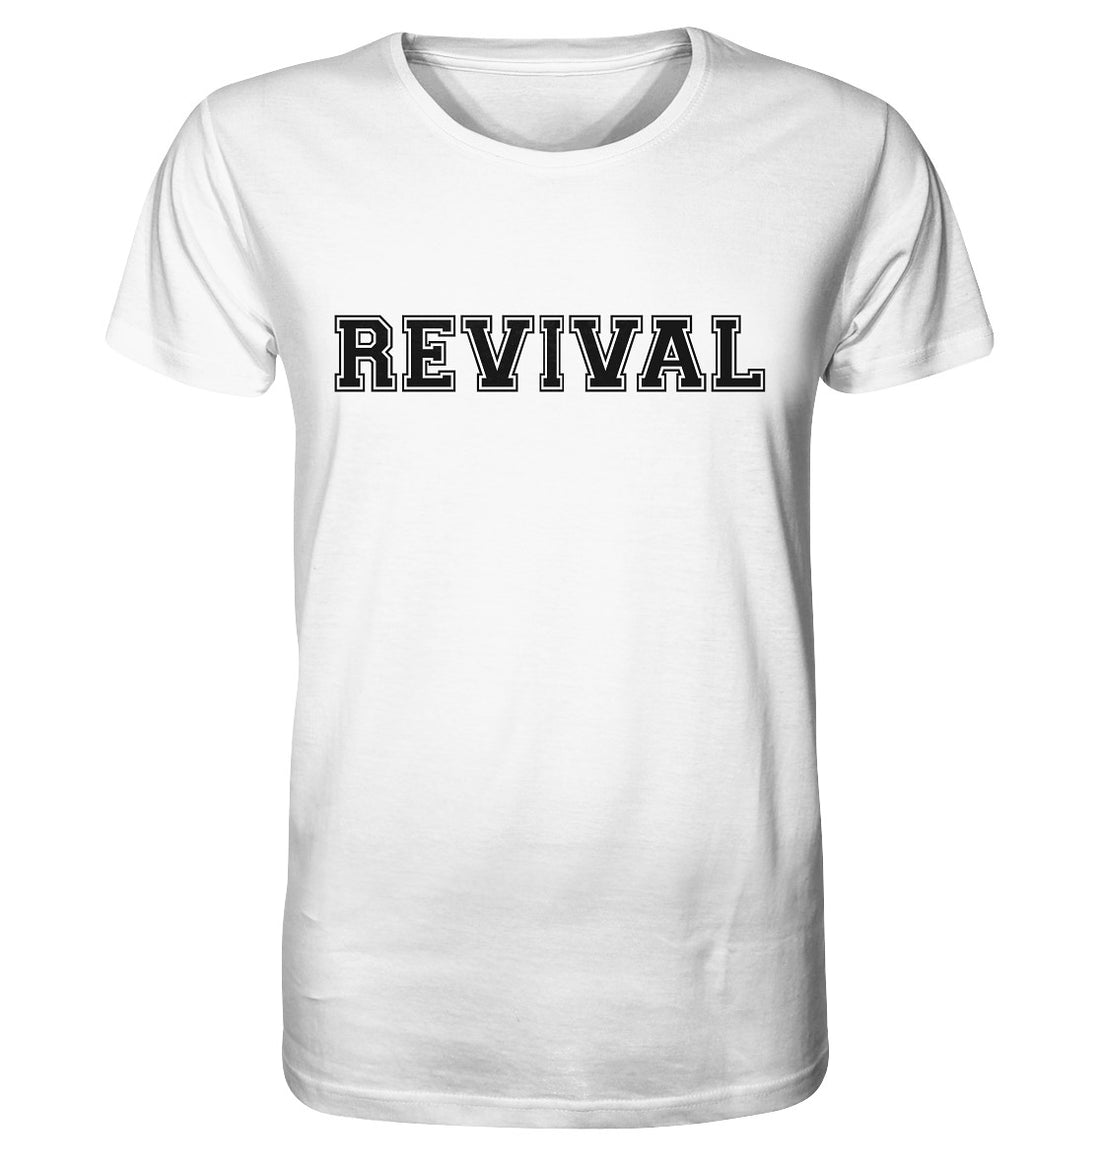 REVIVAL - Organic Shirt